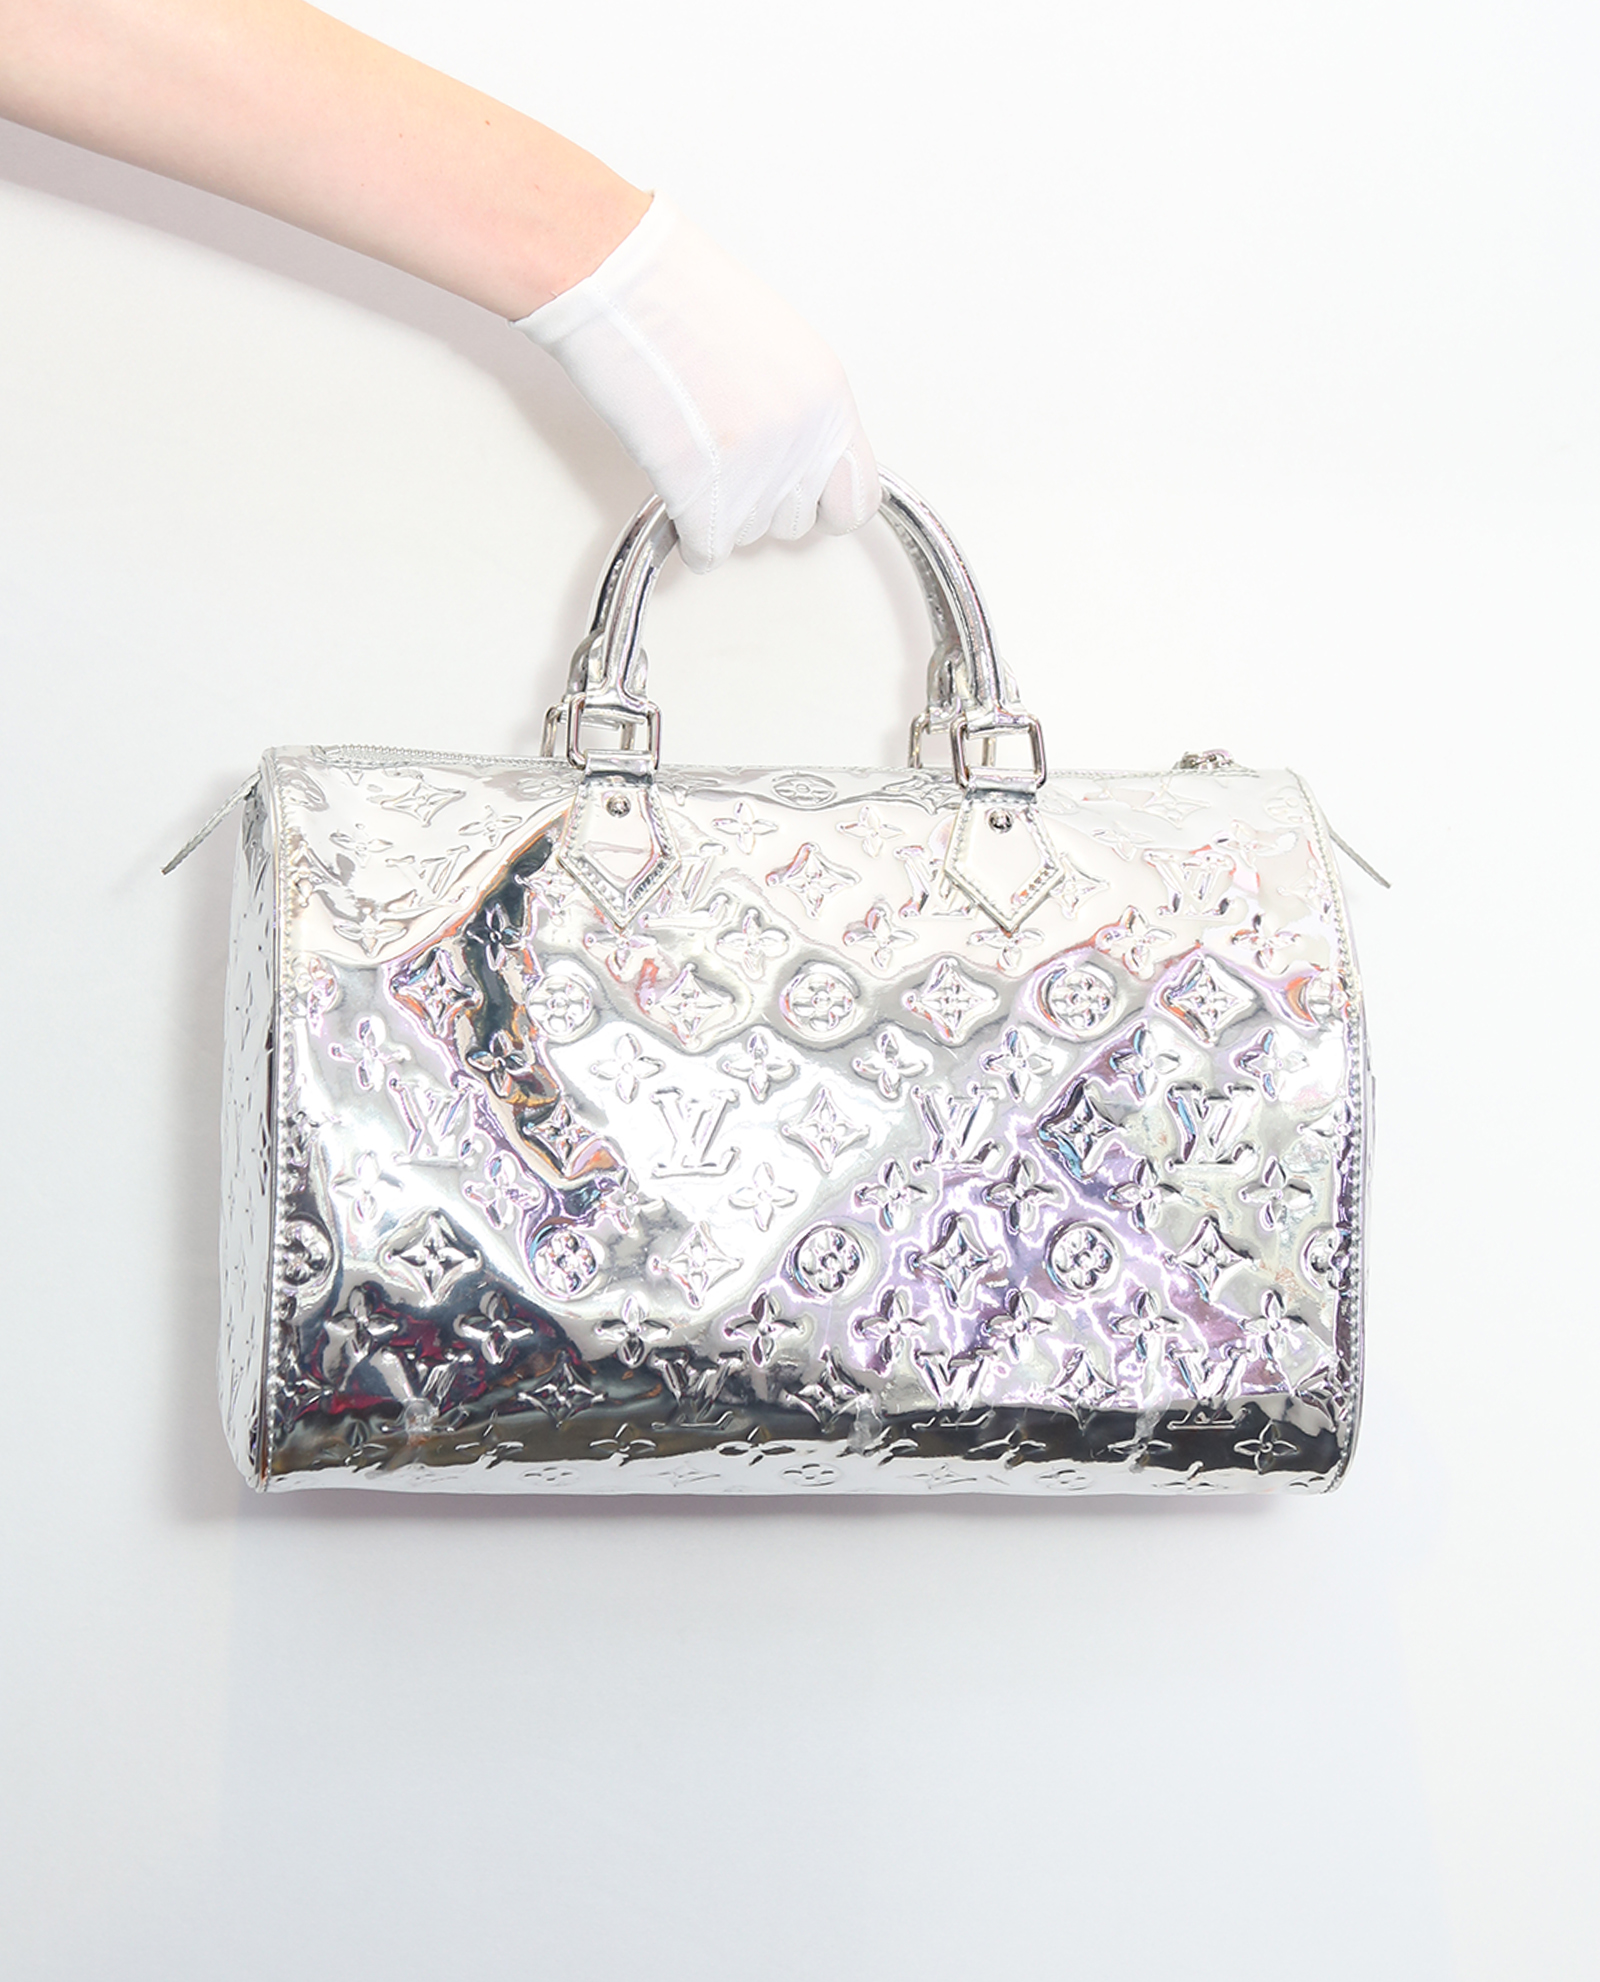 Louis Vuitton Speedy 35 Monogram Double Top Handle Bag on SALE